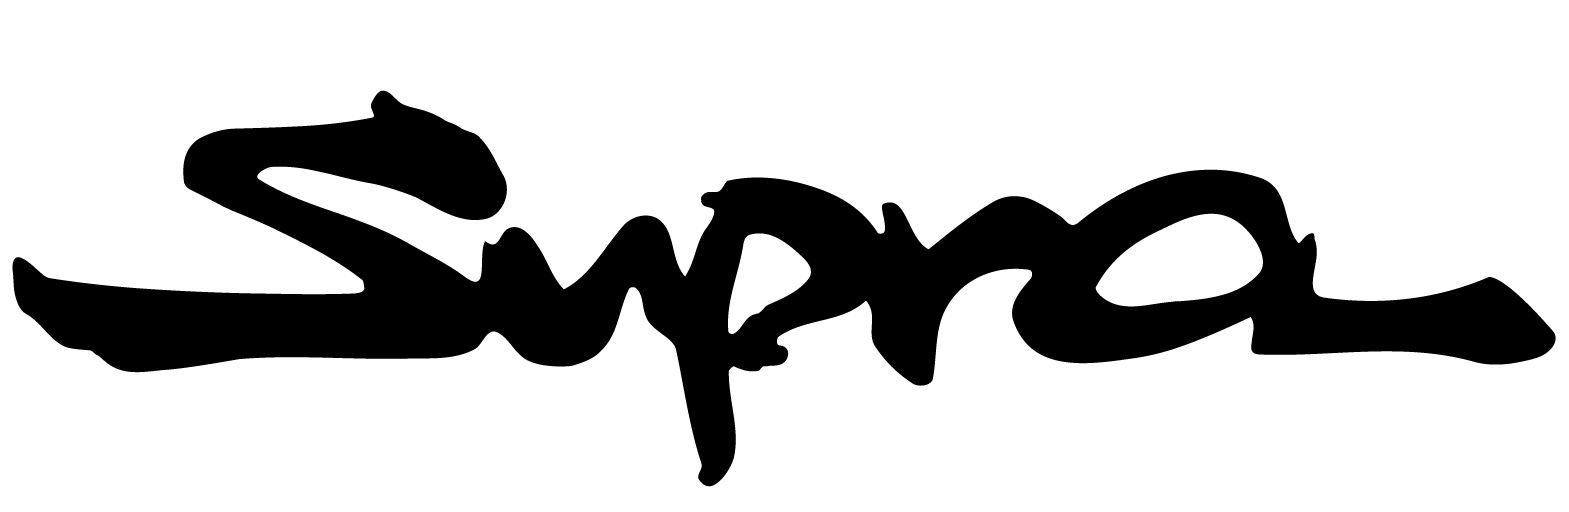 Supra Logo - Image - Supra-logo-toyota-supras-119417 1569 512.jpg | Logopedia ...